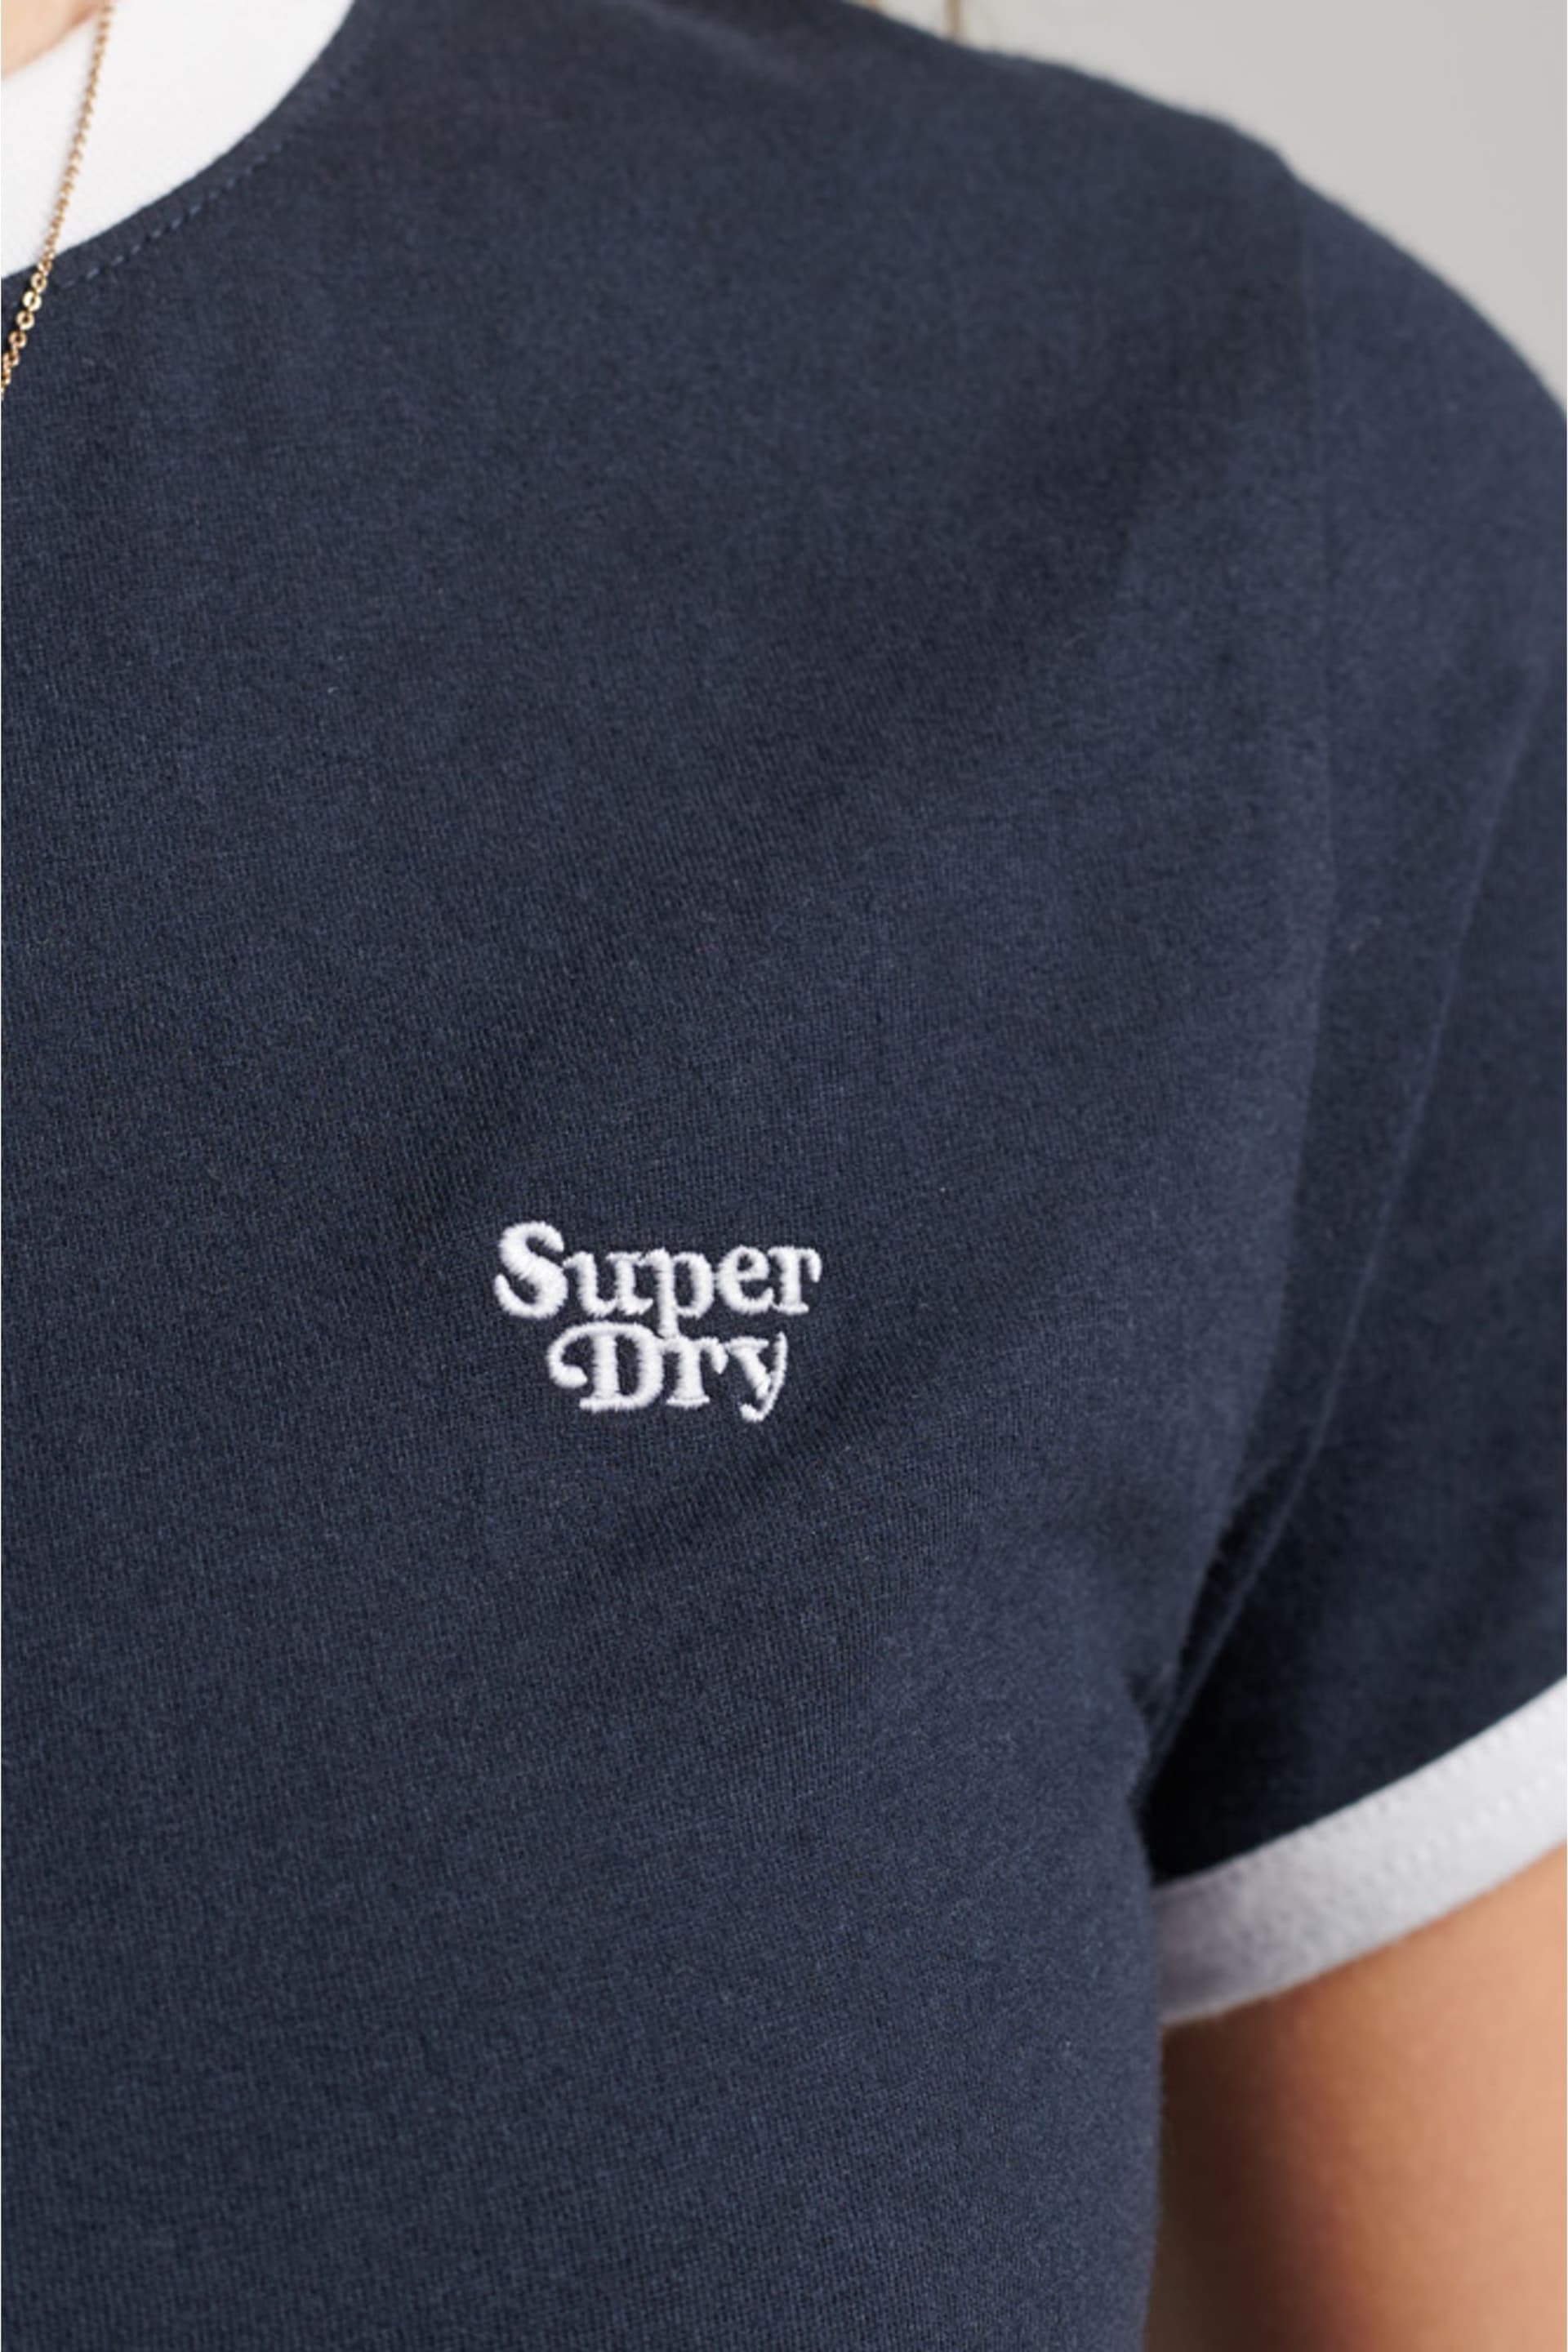 Superdry Blue Organic Cotton Vintage Ringer Crop T-Shirt - Image 4 of 4